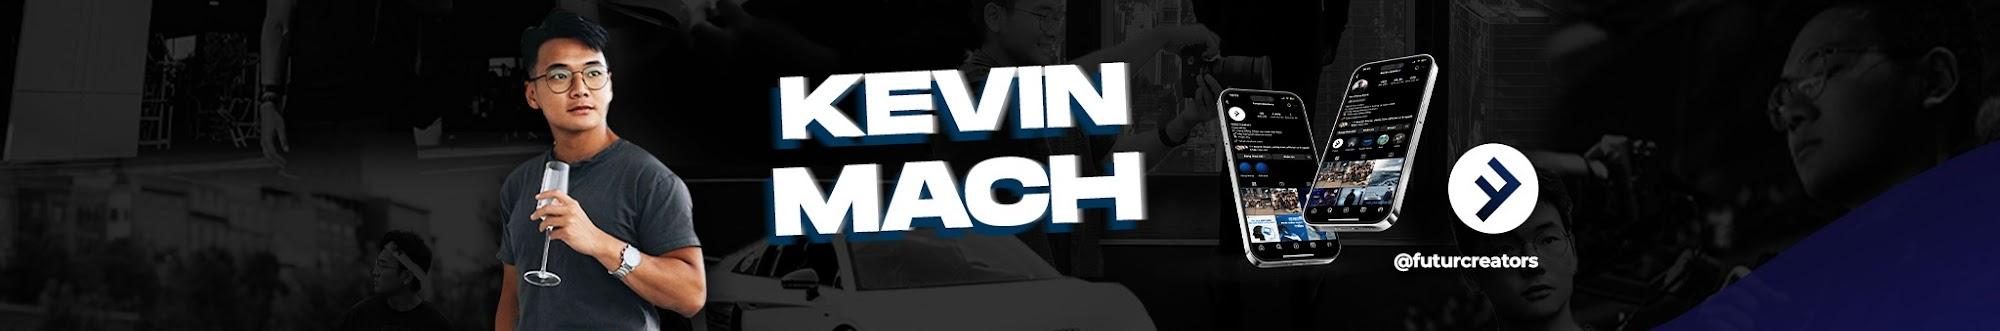 Kevin Mach